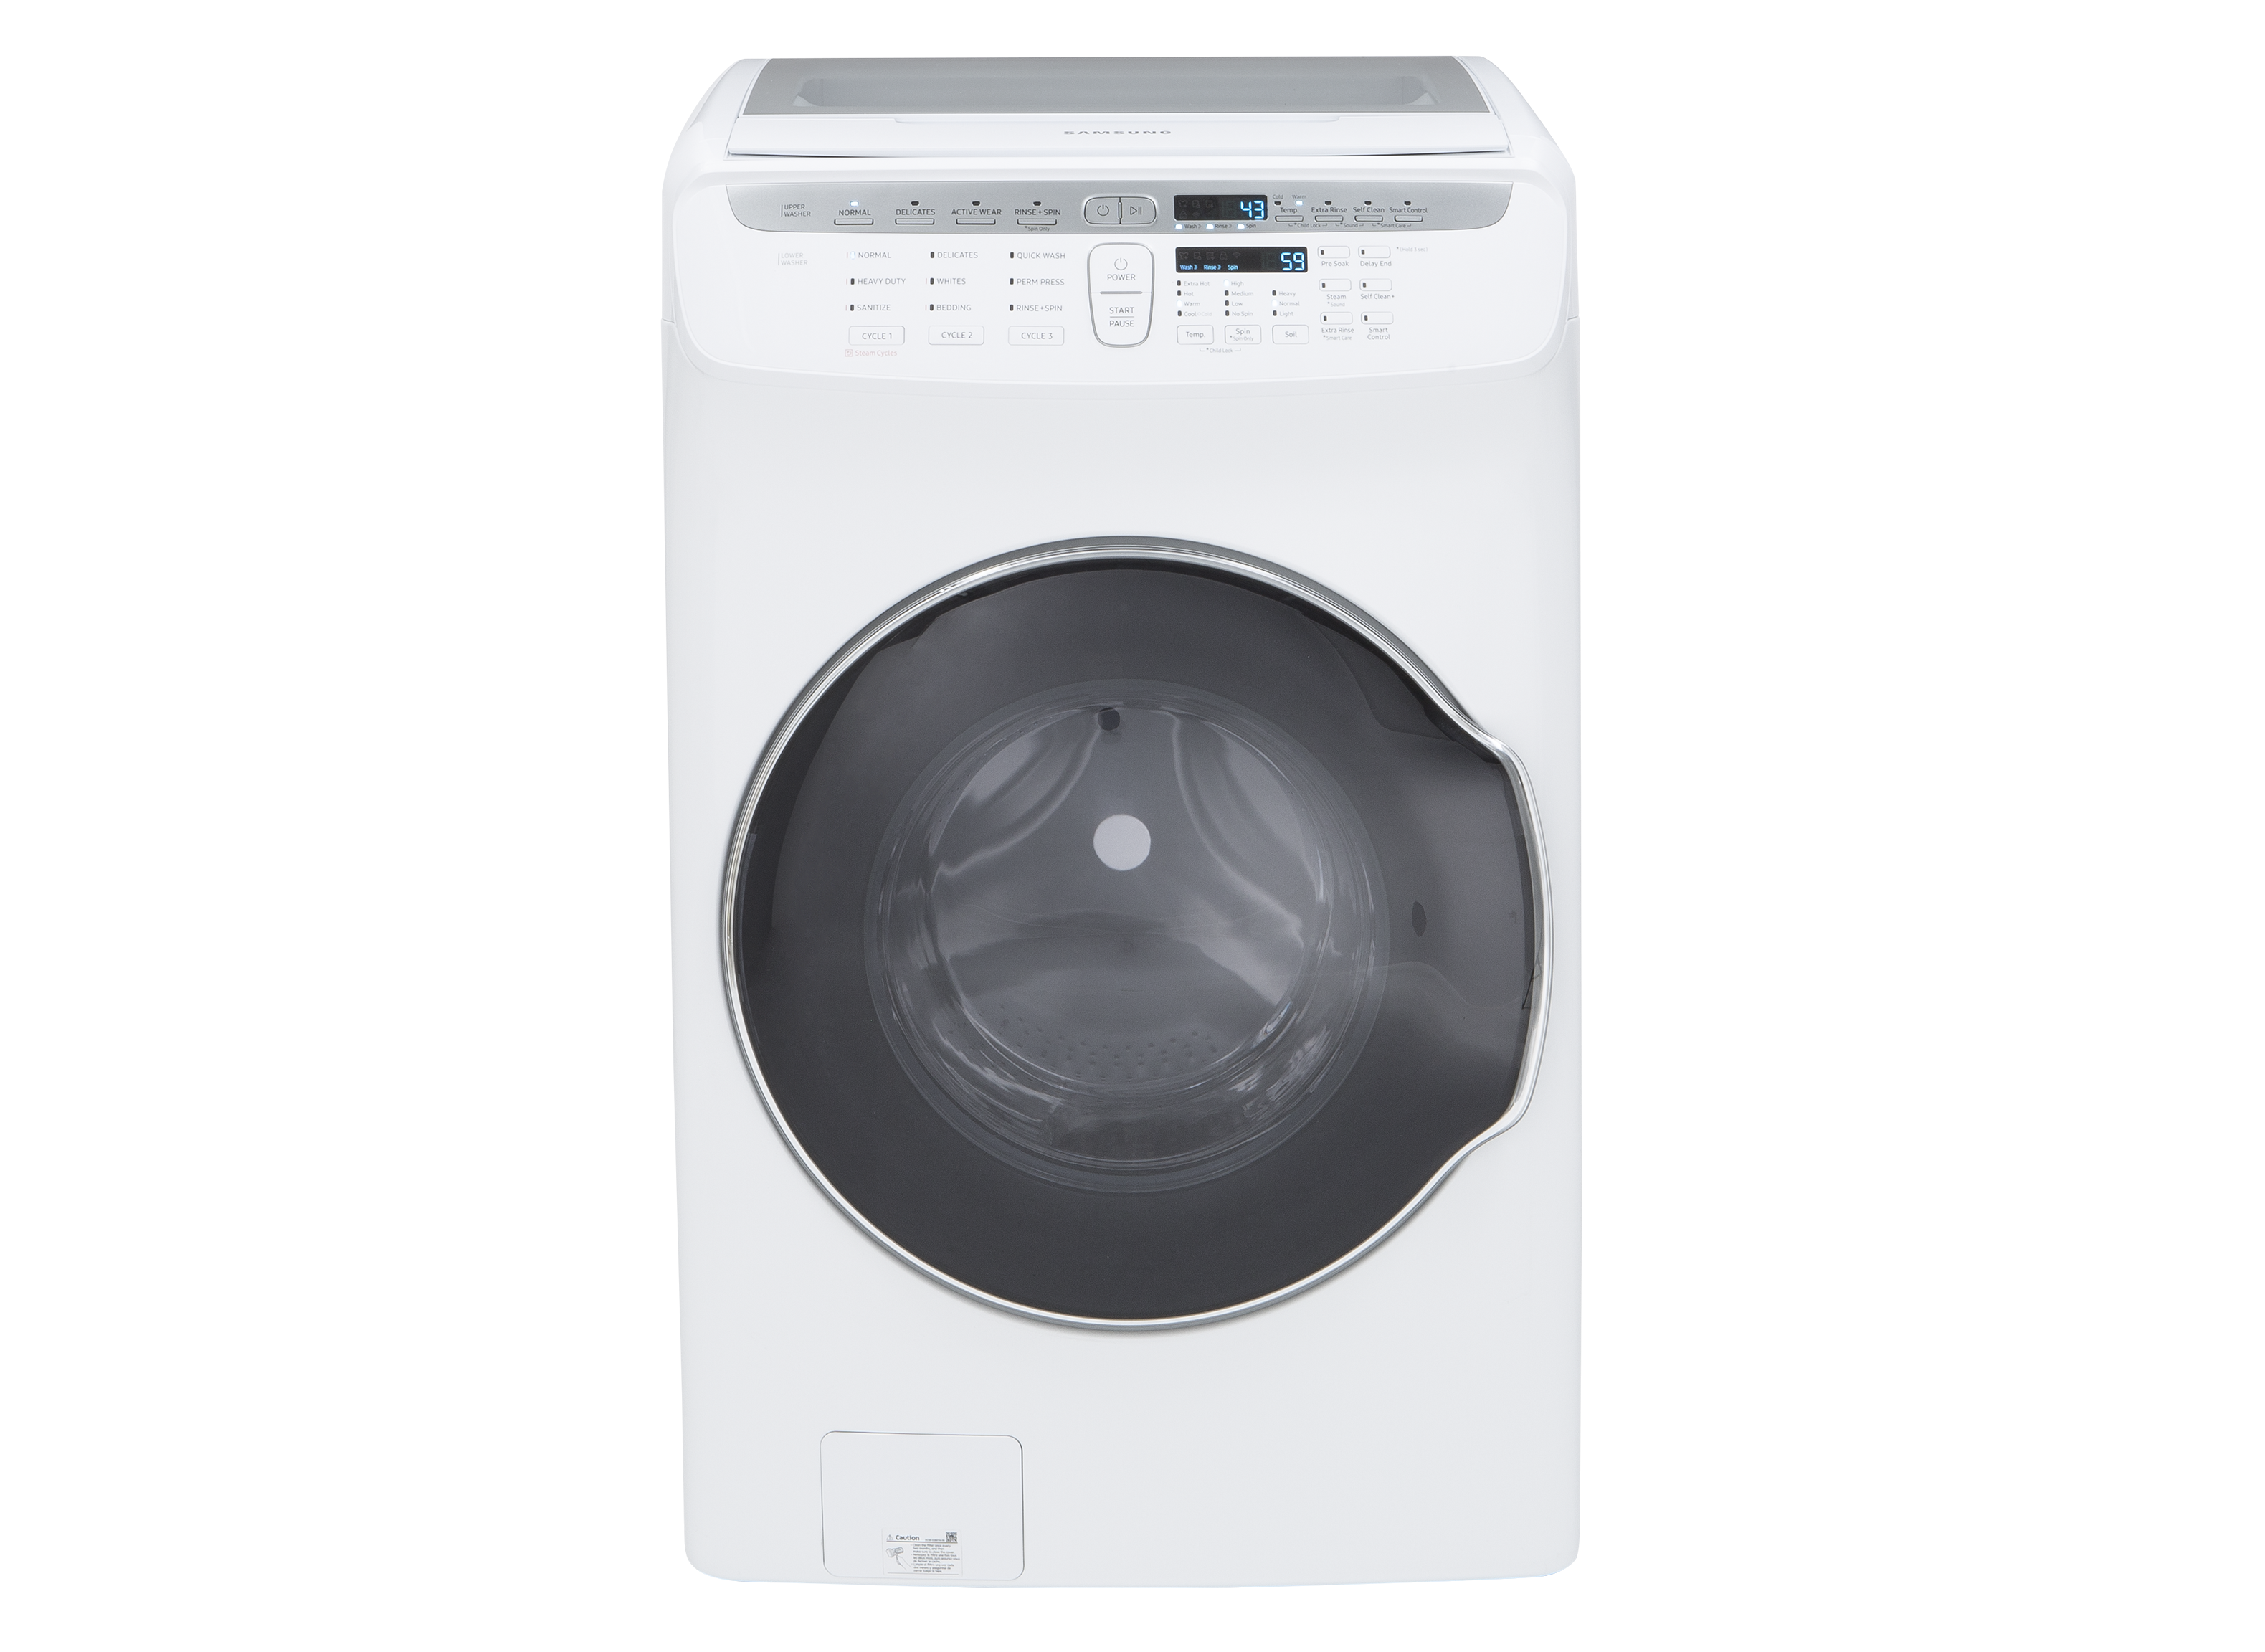 Samsung FlexWash & LG TwinWash Dual Washers - Consumer Reports